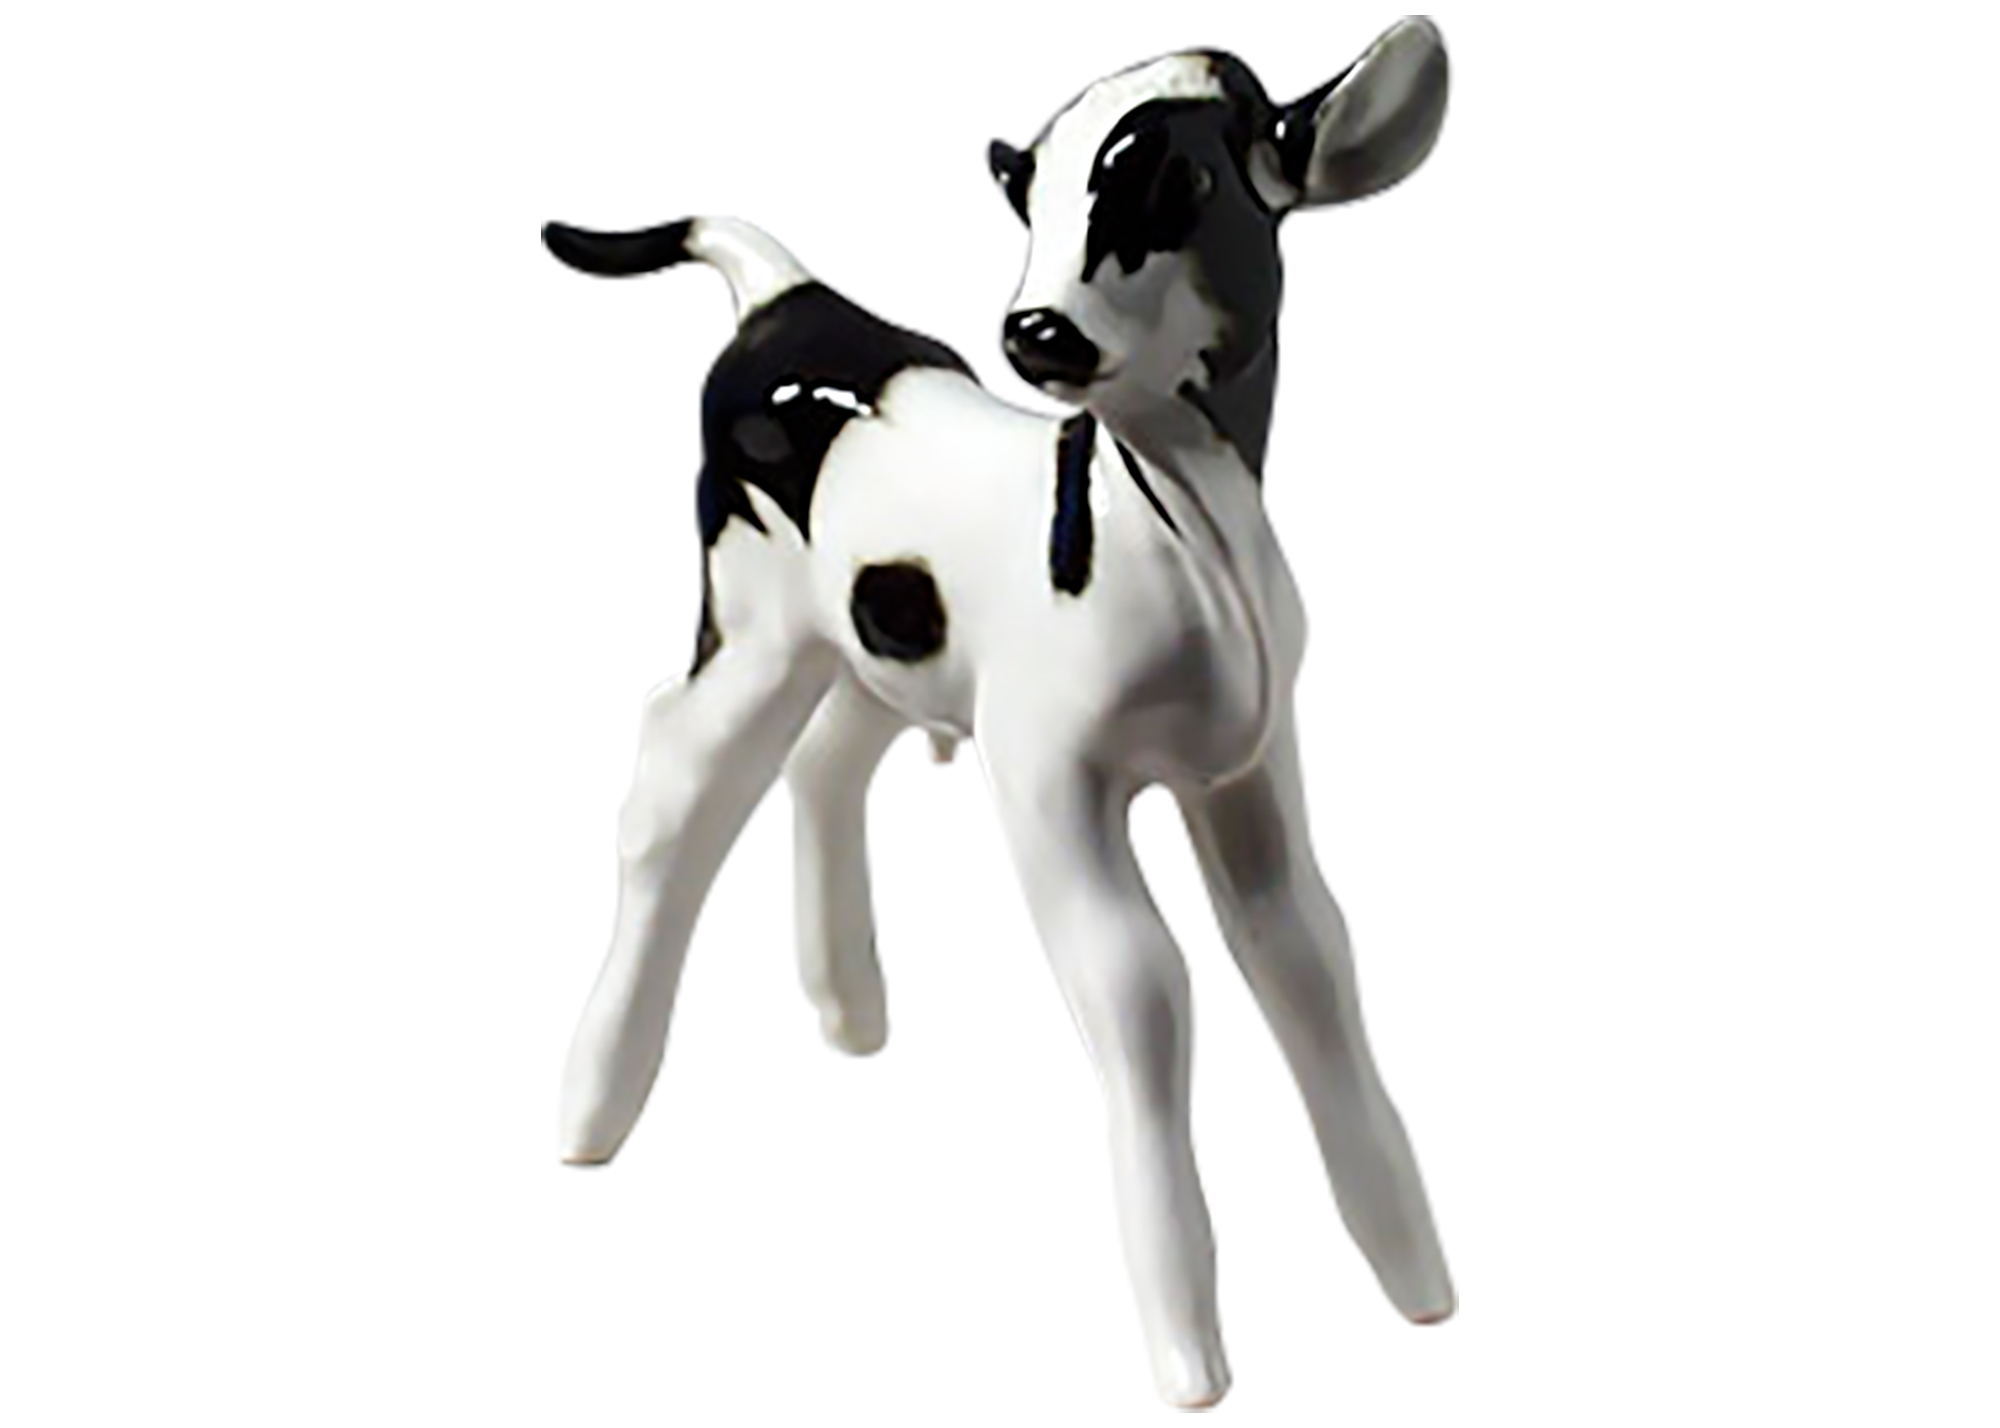 Buy Black & White Calf Figurine at GoldenCockerel.com